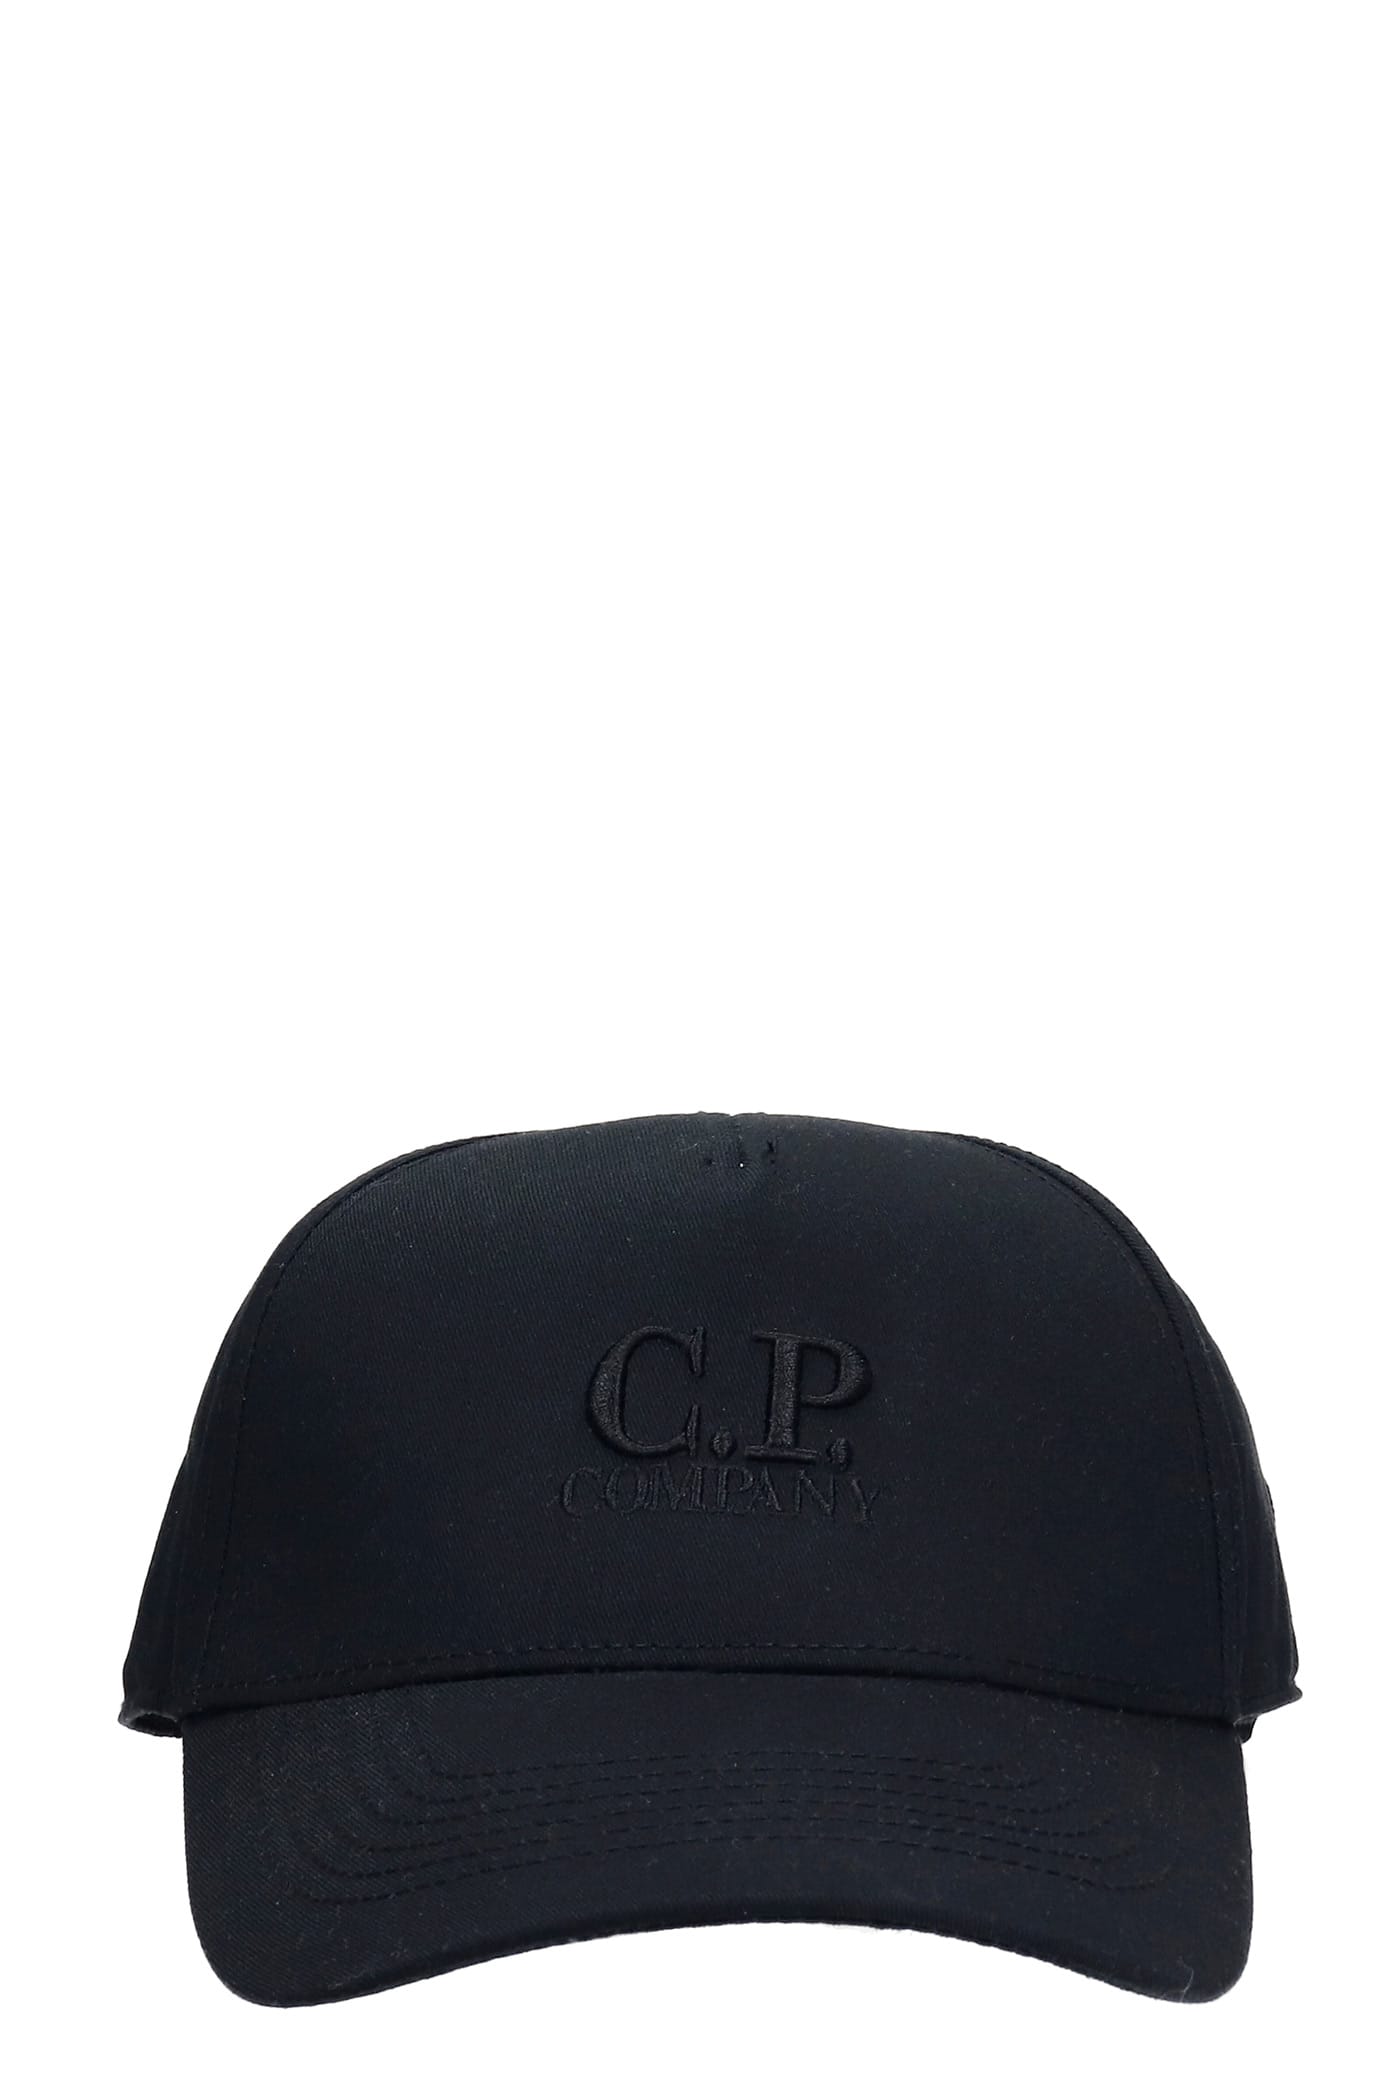 C.P. Company Hats In Black Cotton